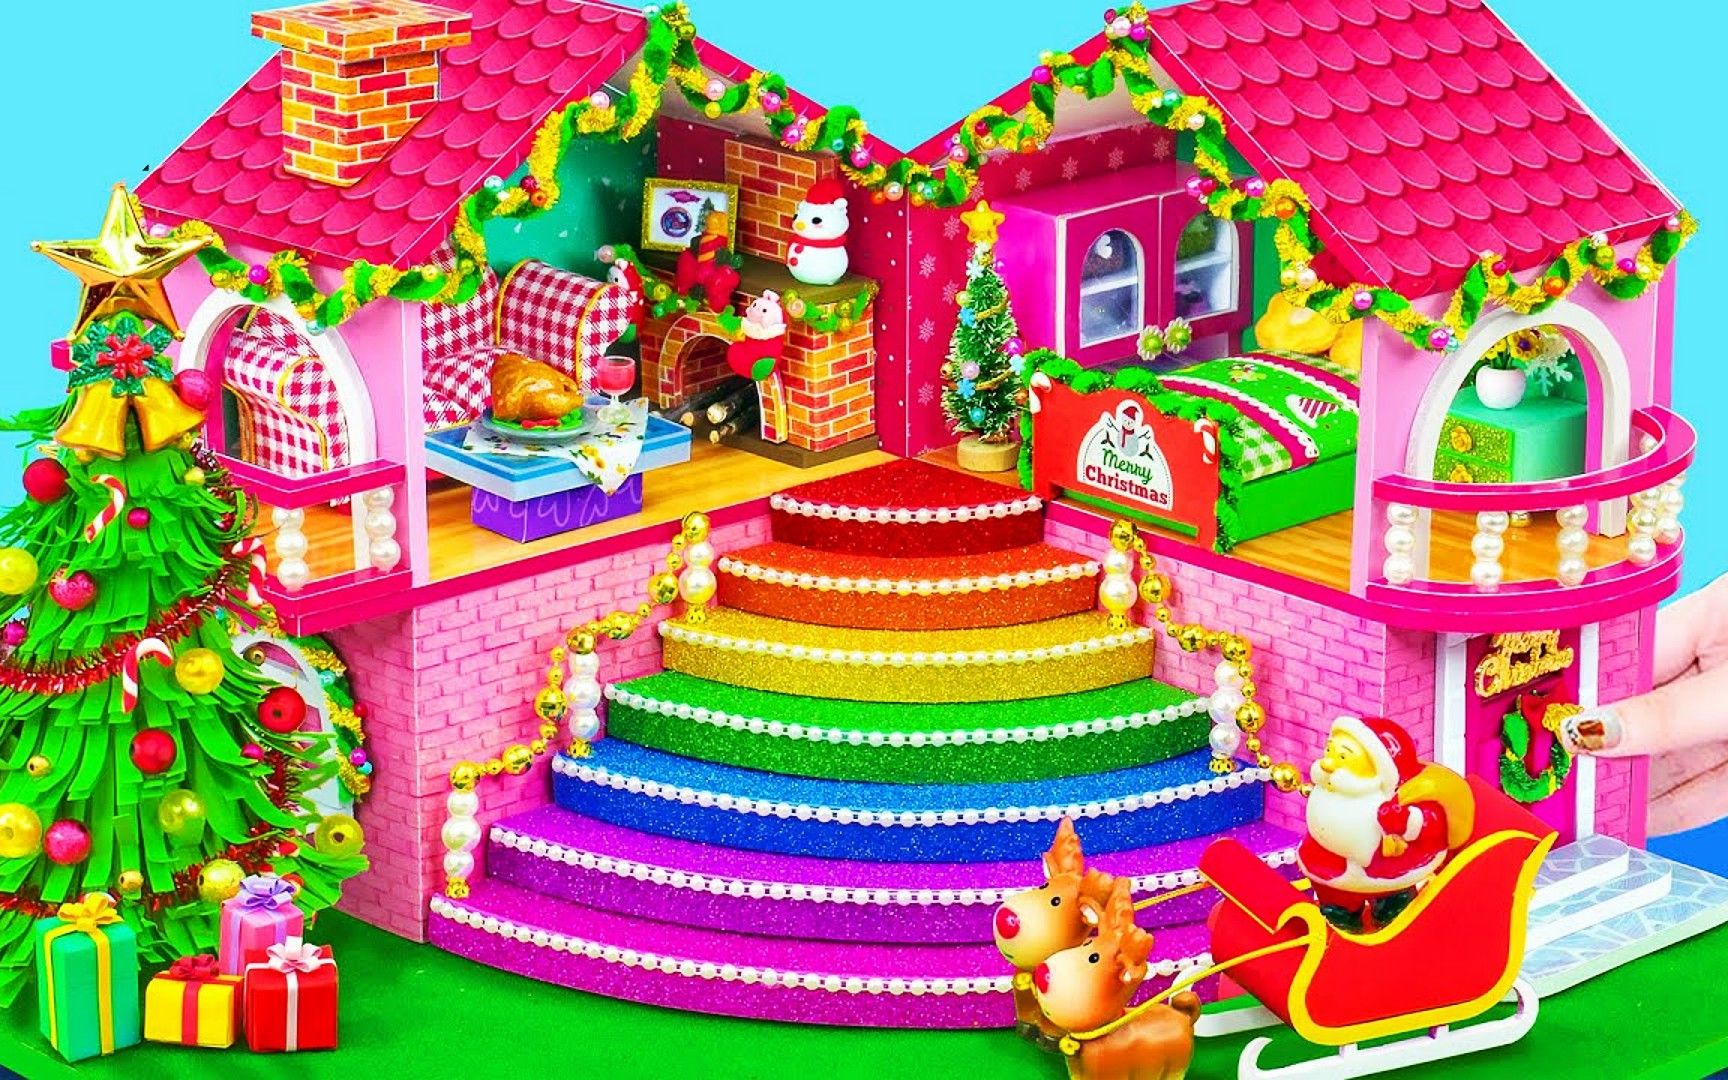 DIY迷你小屋：挑战手工建造圣诞主题小房子，大家觉得怎么样呢？